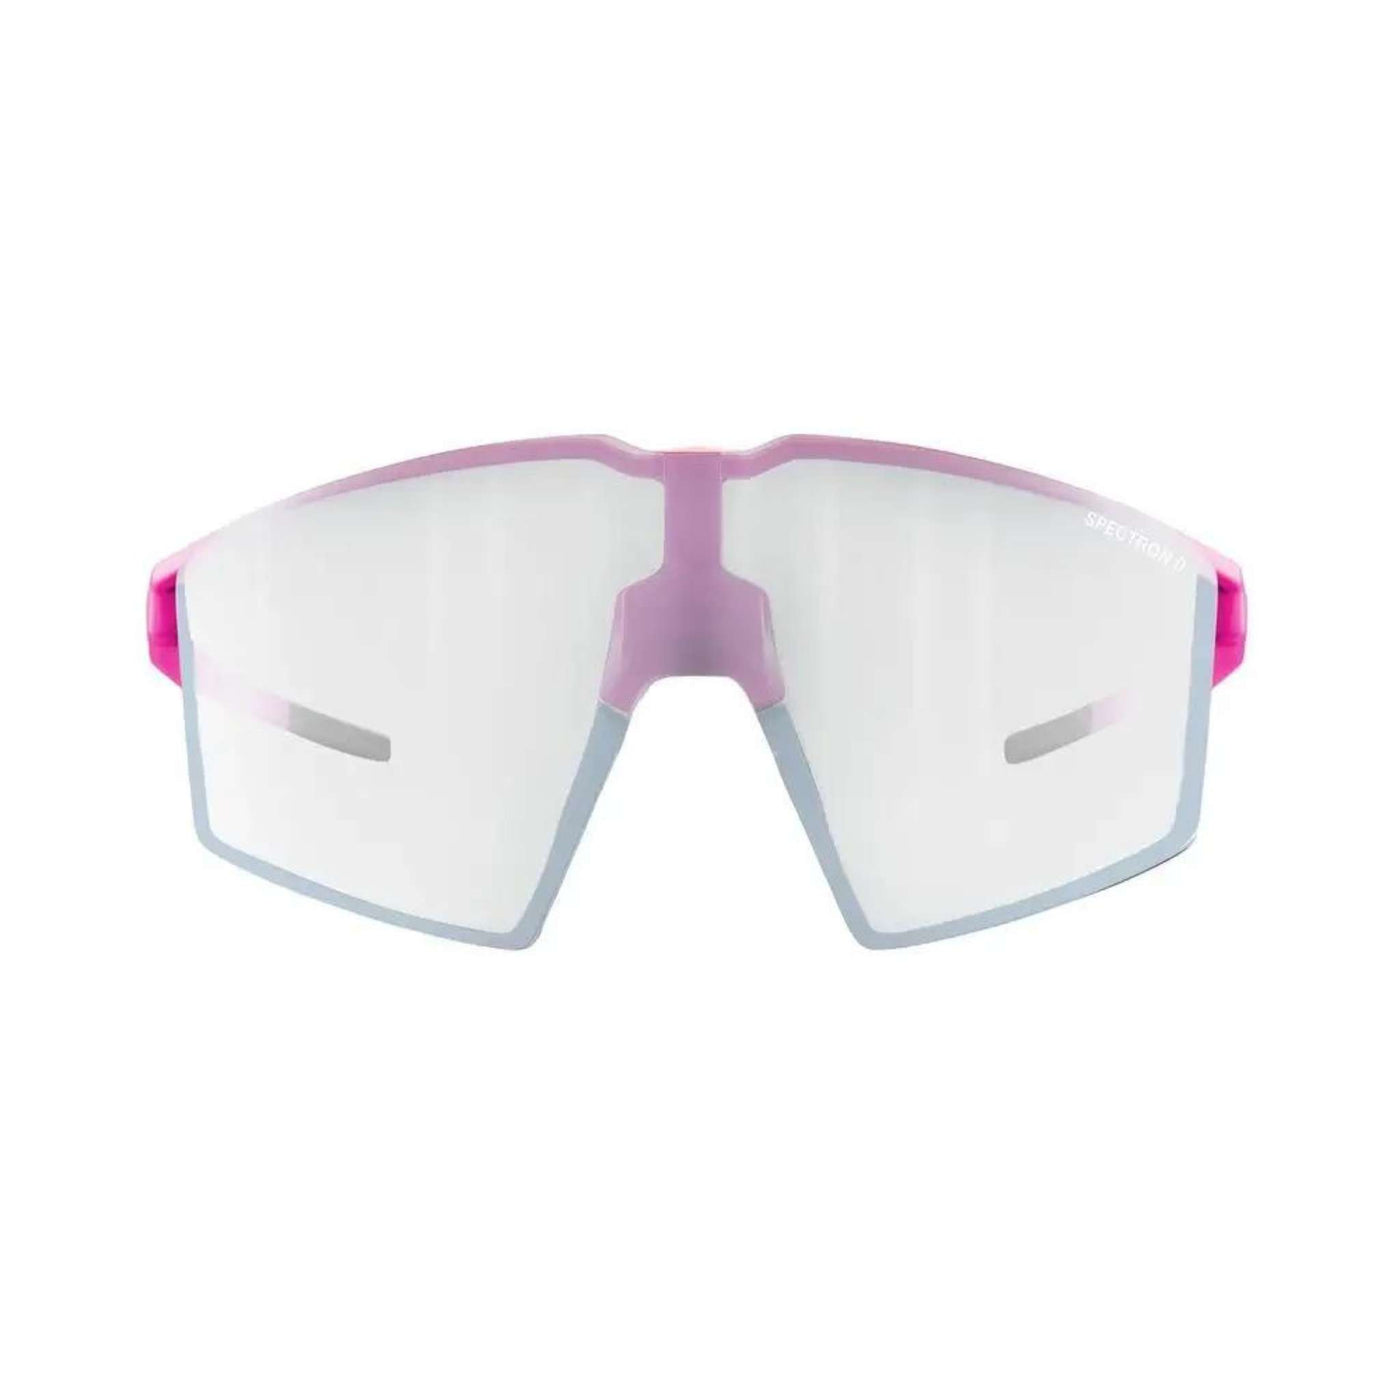 Julbo Edge Fluo Pink/Blue Sunglasses - Spectron 3+ SP0 | Performance Sunglasses | Further Faster Christchurch NZ